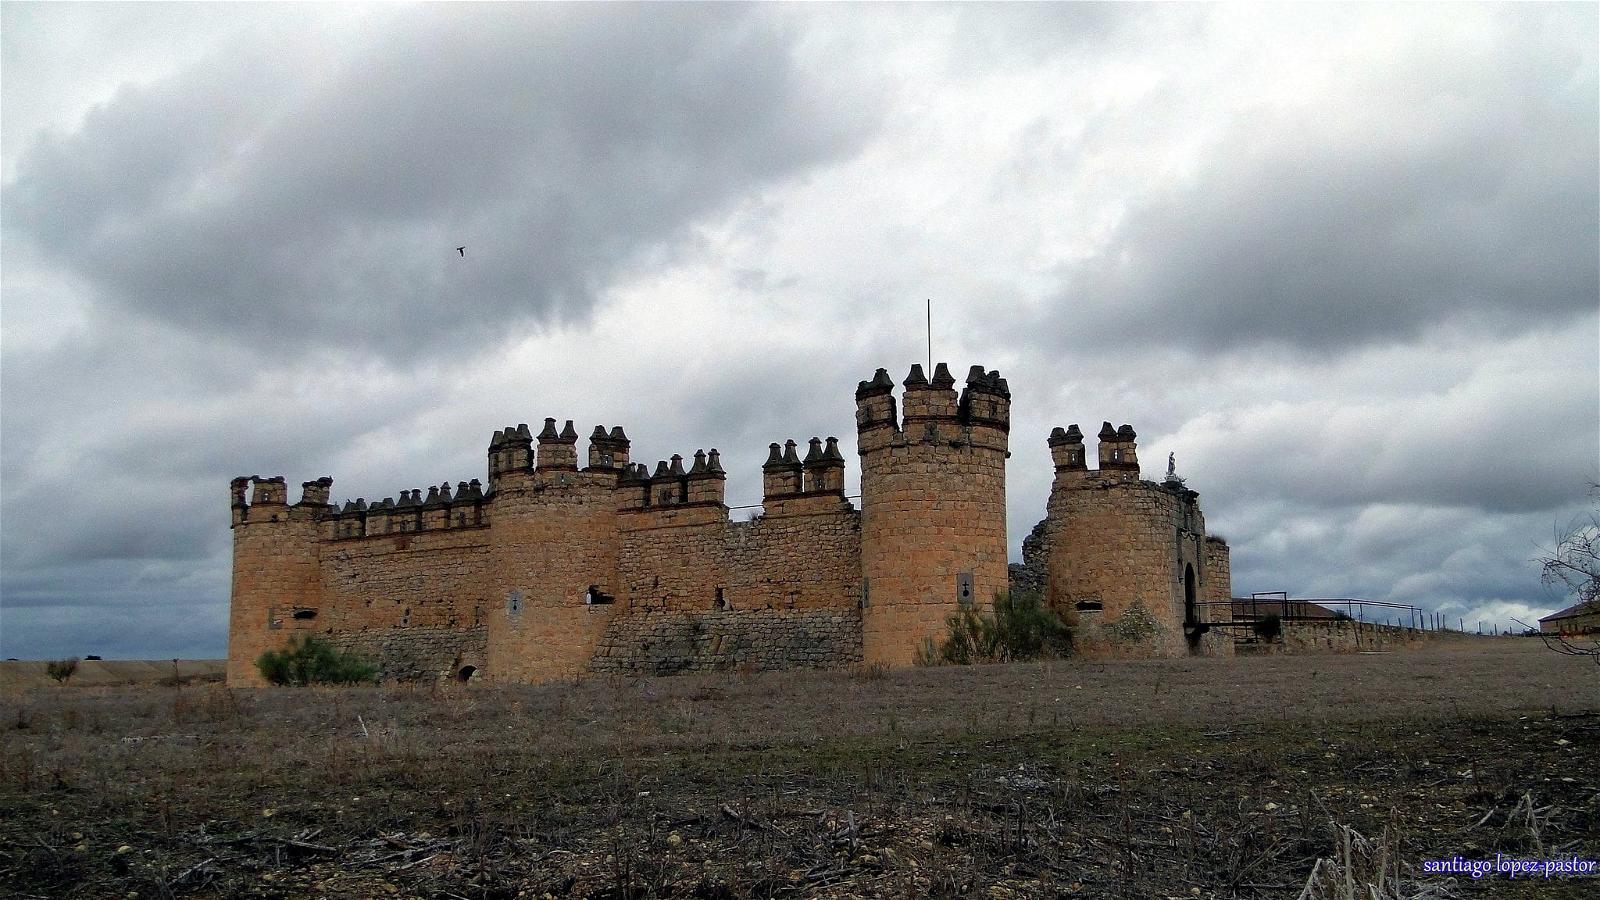 Billede af Castillo de San Silvestre. españa castle spain medieval toledo espagne middleages castillo chateaux castilla castillalamancha provinciadetoledo